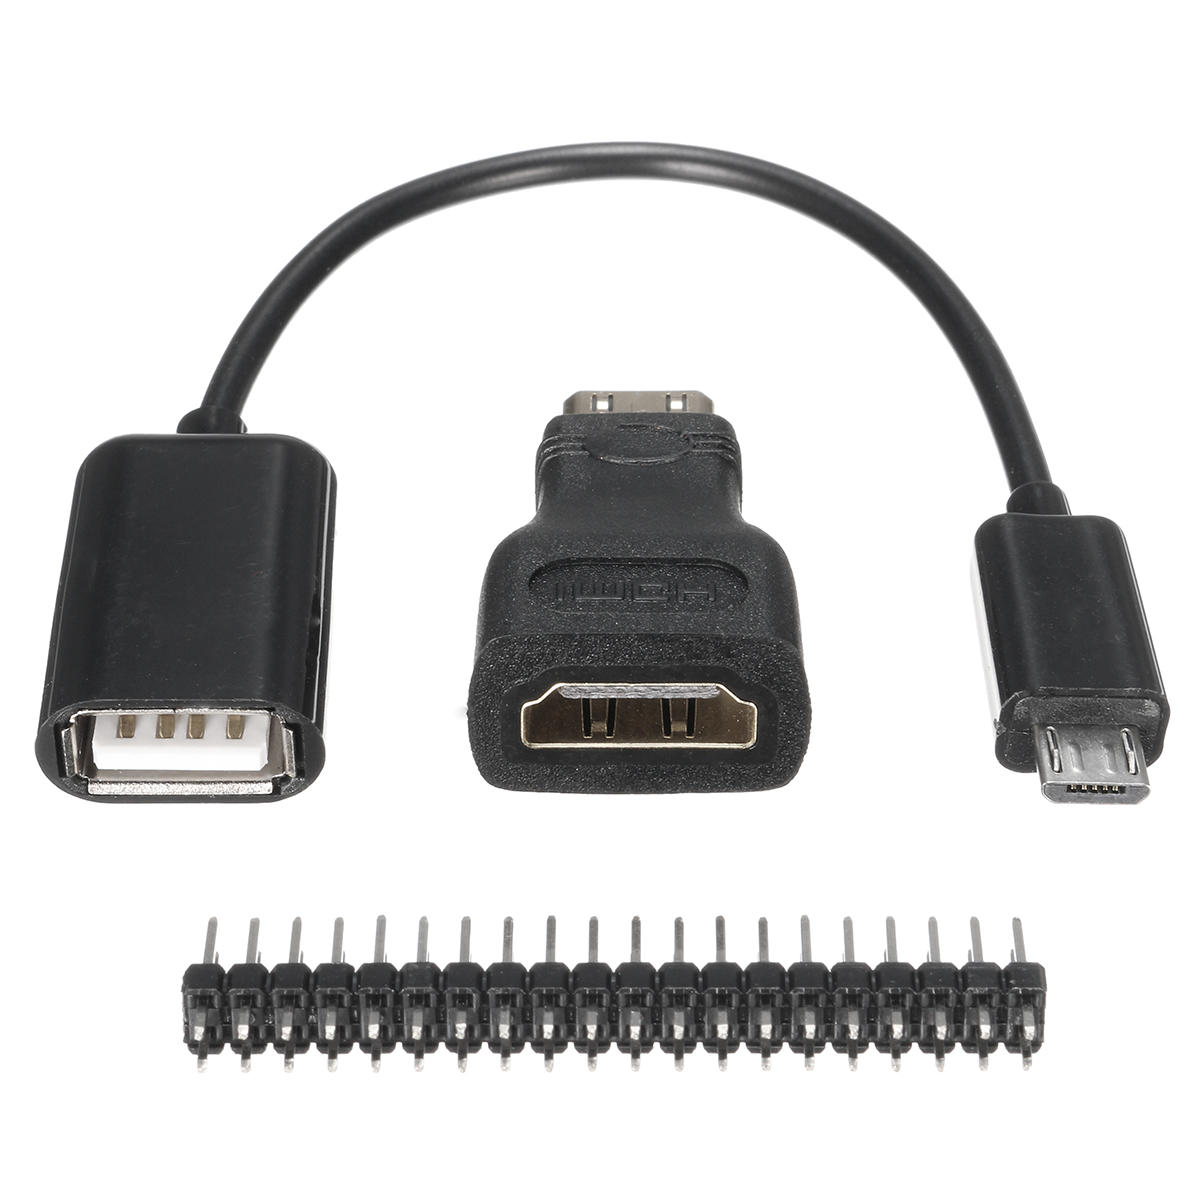 3 in 1 Mini-HDMI to HDMI Adapter+Micro USB to USB Female Cable+40P Pin Kits For Raspberry Pi Zero